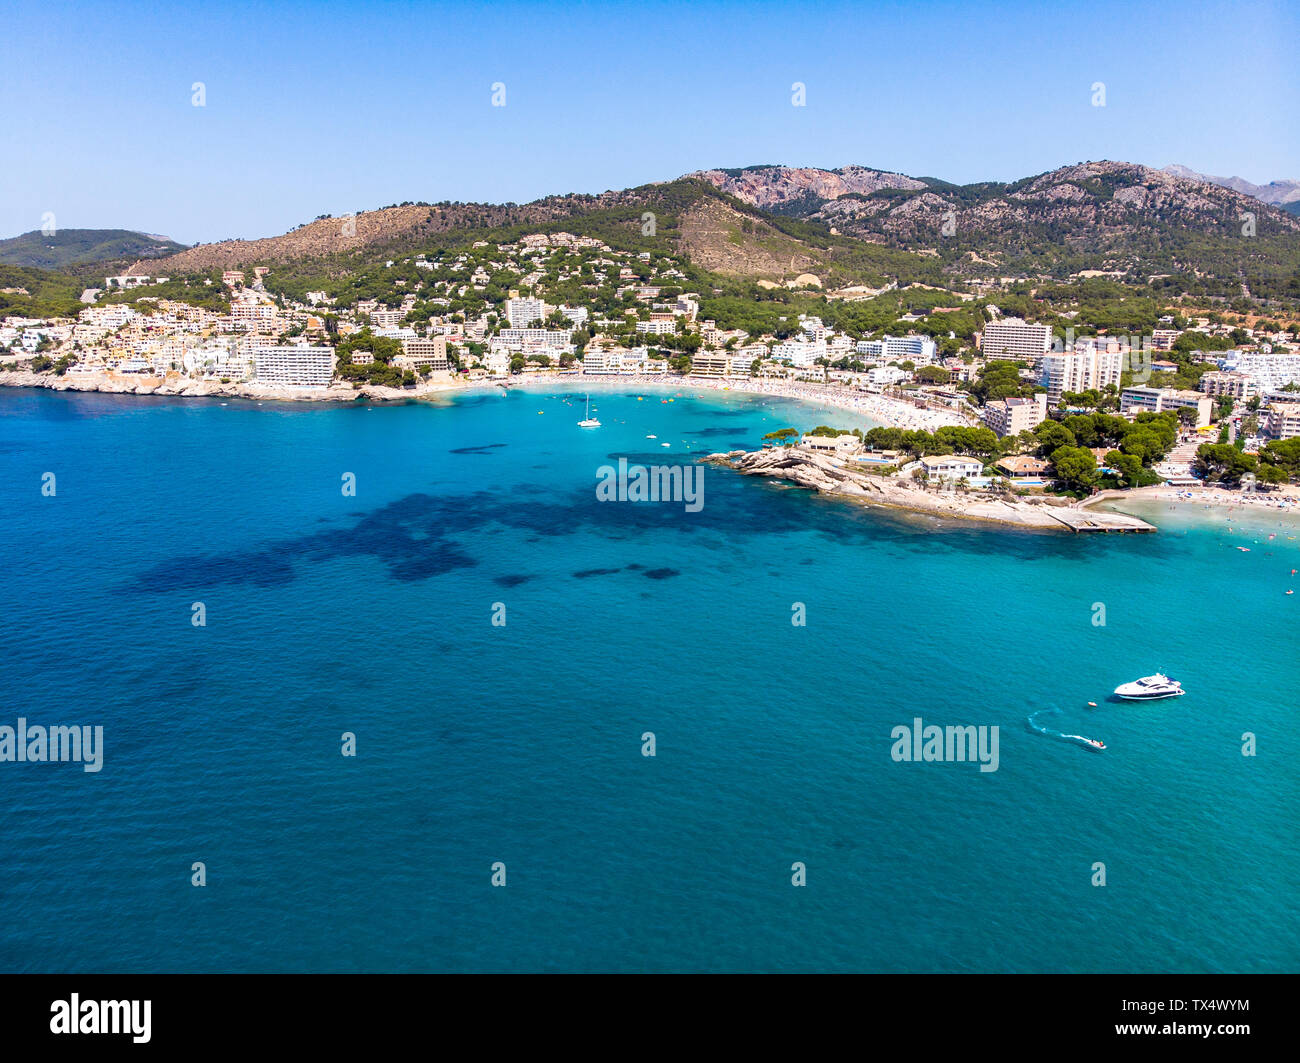 Spain, Majorca, Costa de la Calma, aerial view over Peguera with hotels and beaches Stock Photo